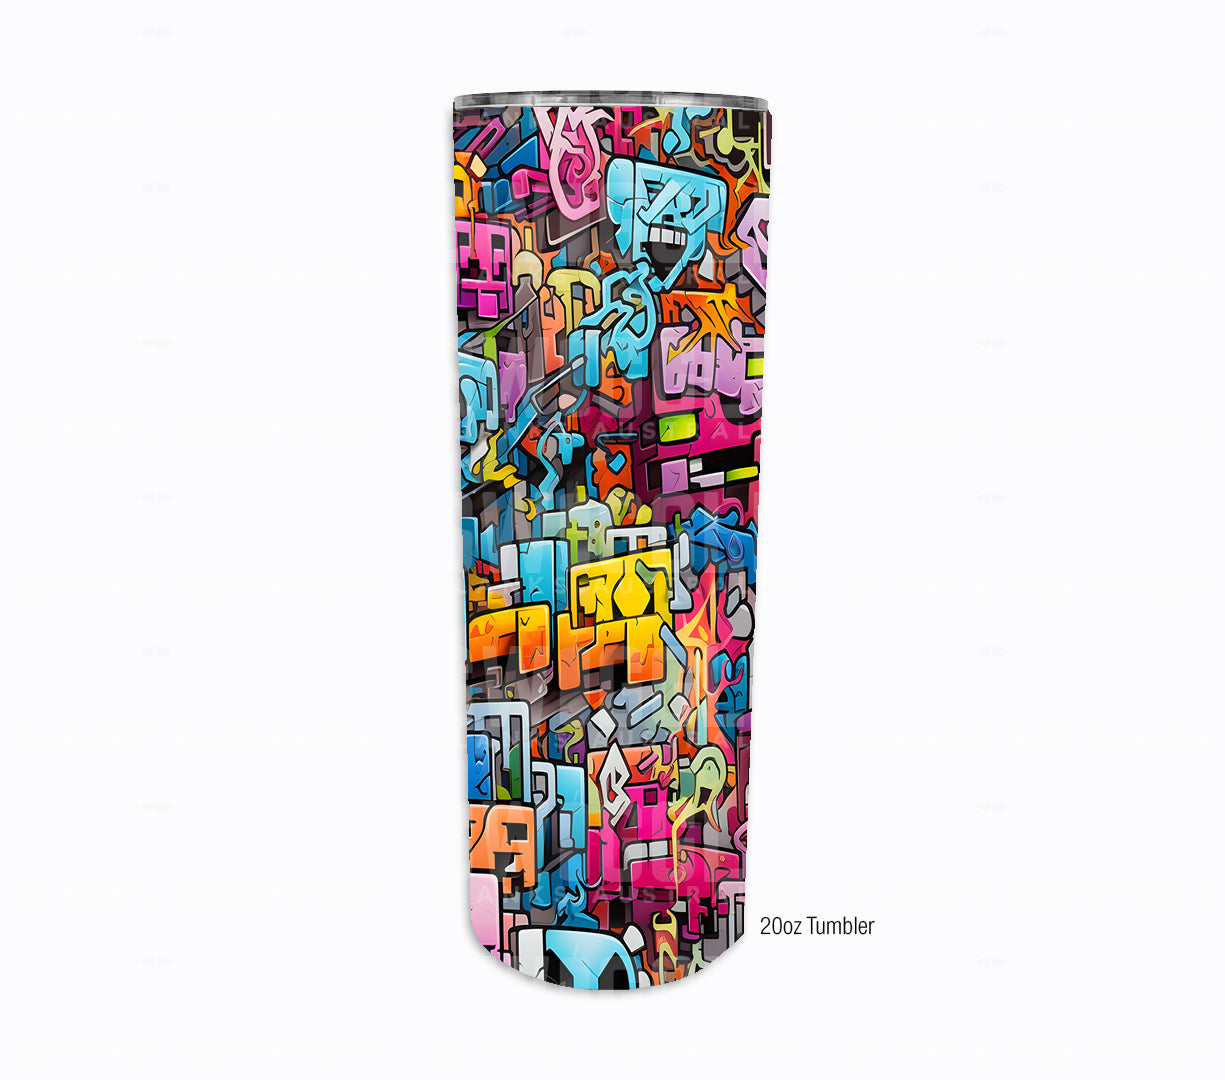 Graffiti Kids #27 - Digital Download - Assorted Bottle Sizes